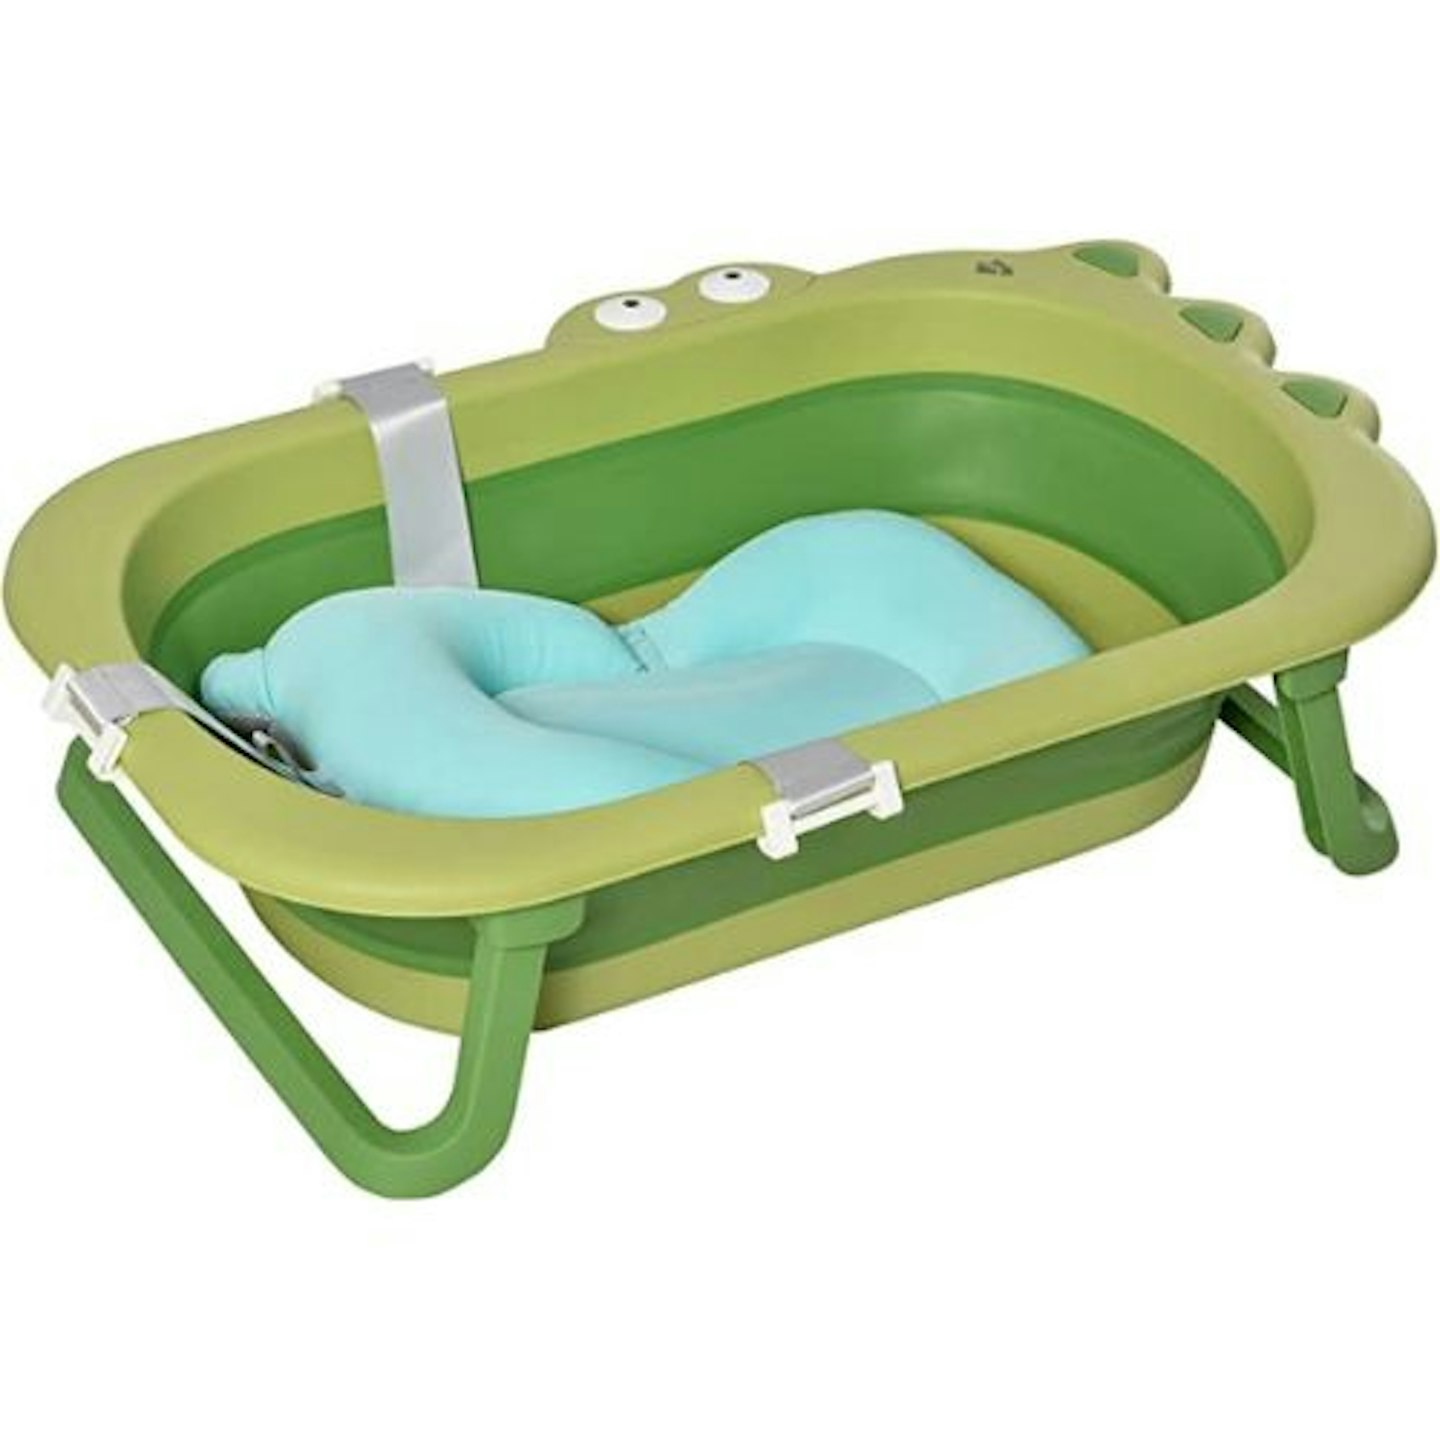 HOMCOM Baby Bath Tub for Toddler